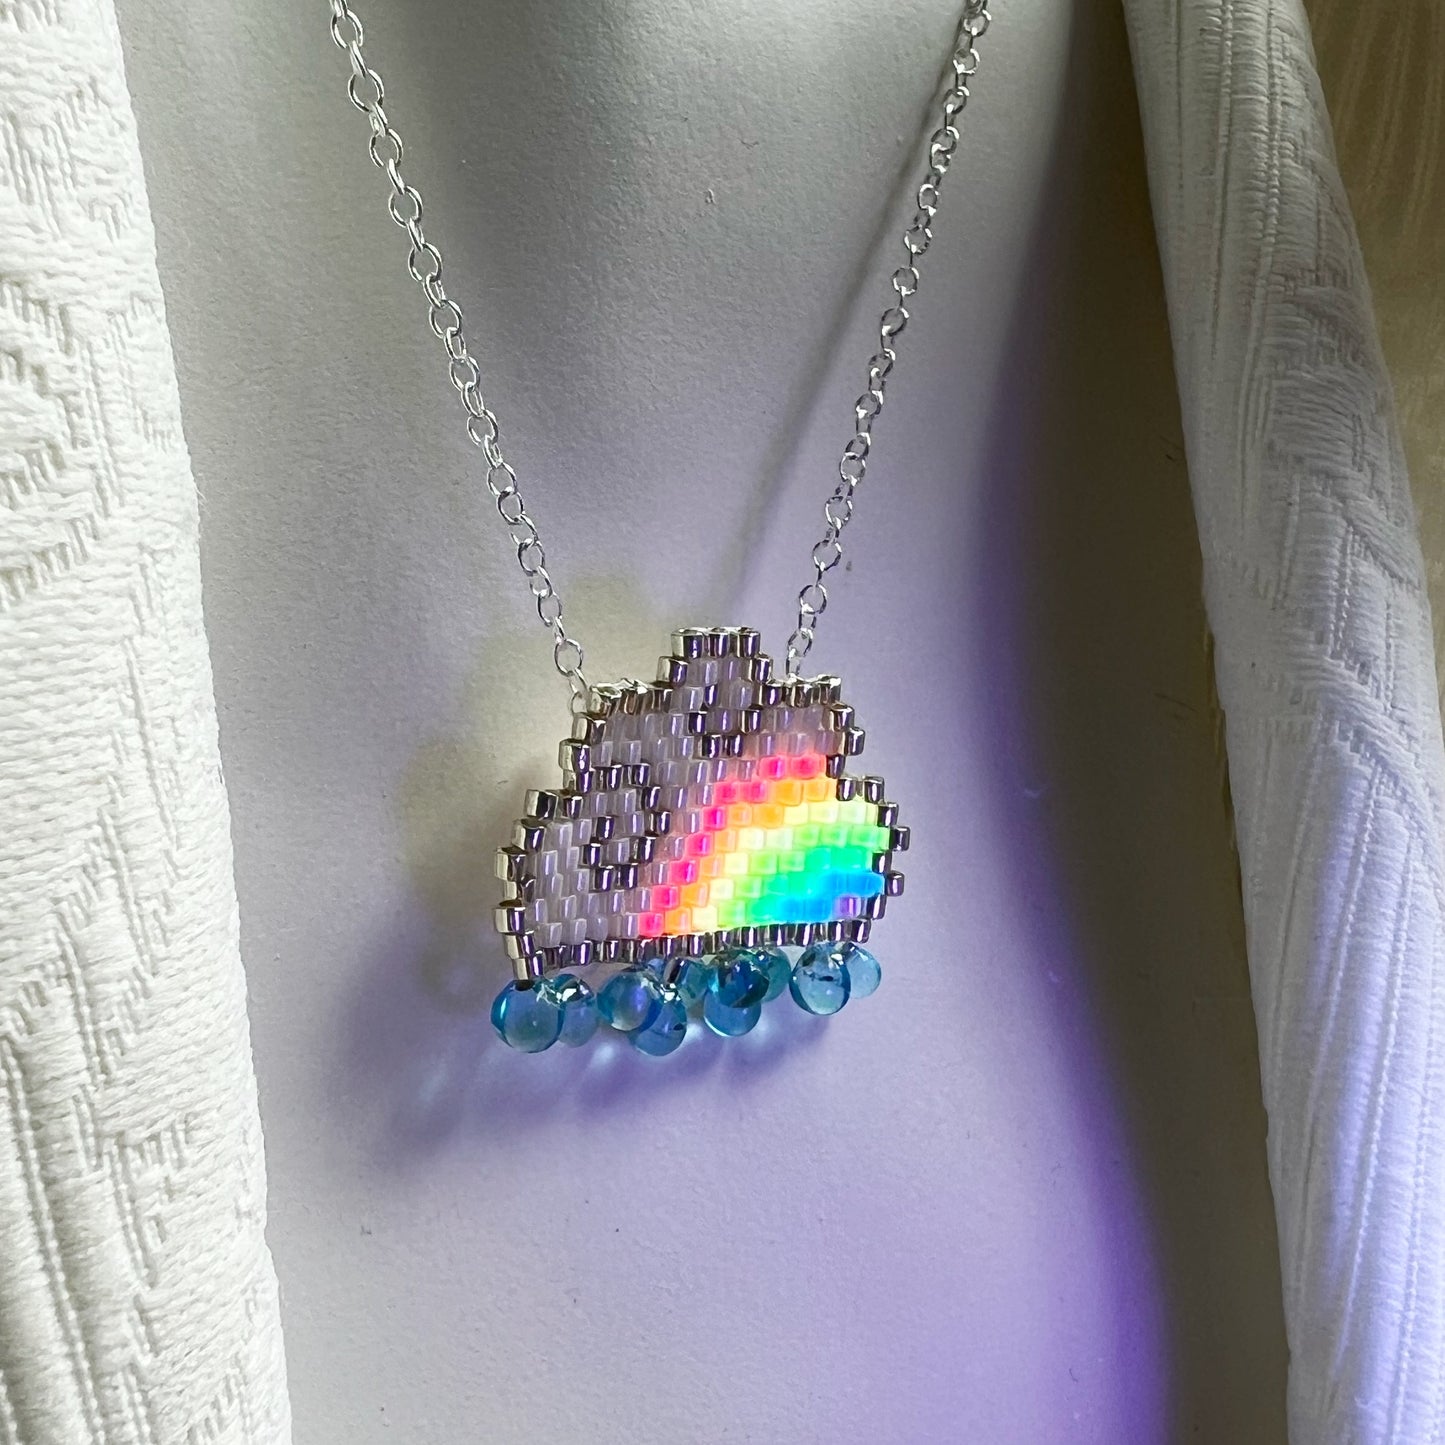 Raincloud necklace with fluorescent UV rainbow beads